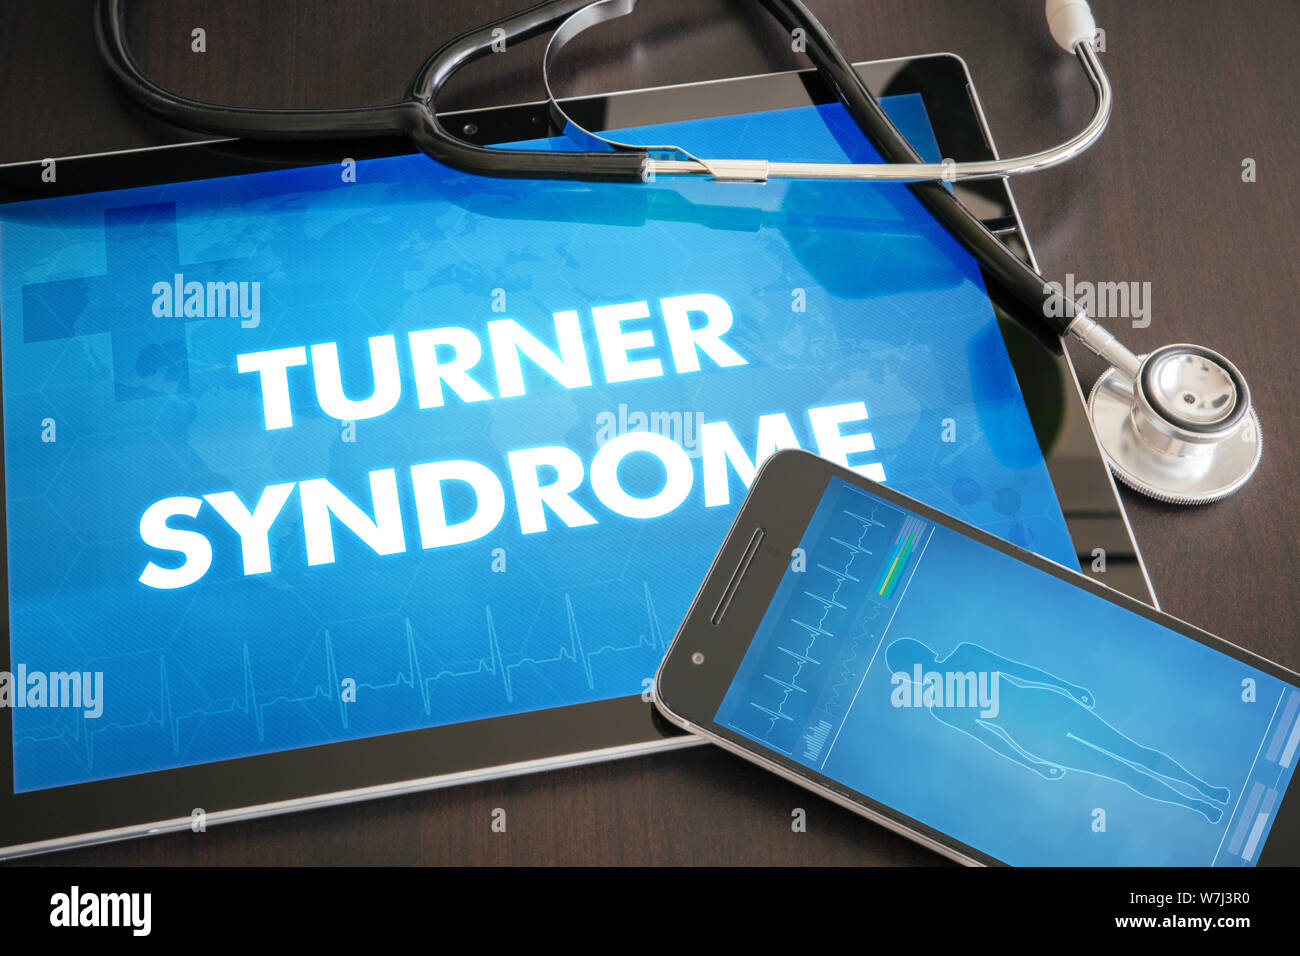 Turner Syndrom (endokrinen Erkrankung) Diagnose medizinisches Konzept auf Tablet Bildschirm mit Stethoskop. Stockfoto